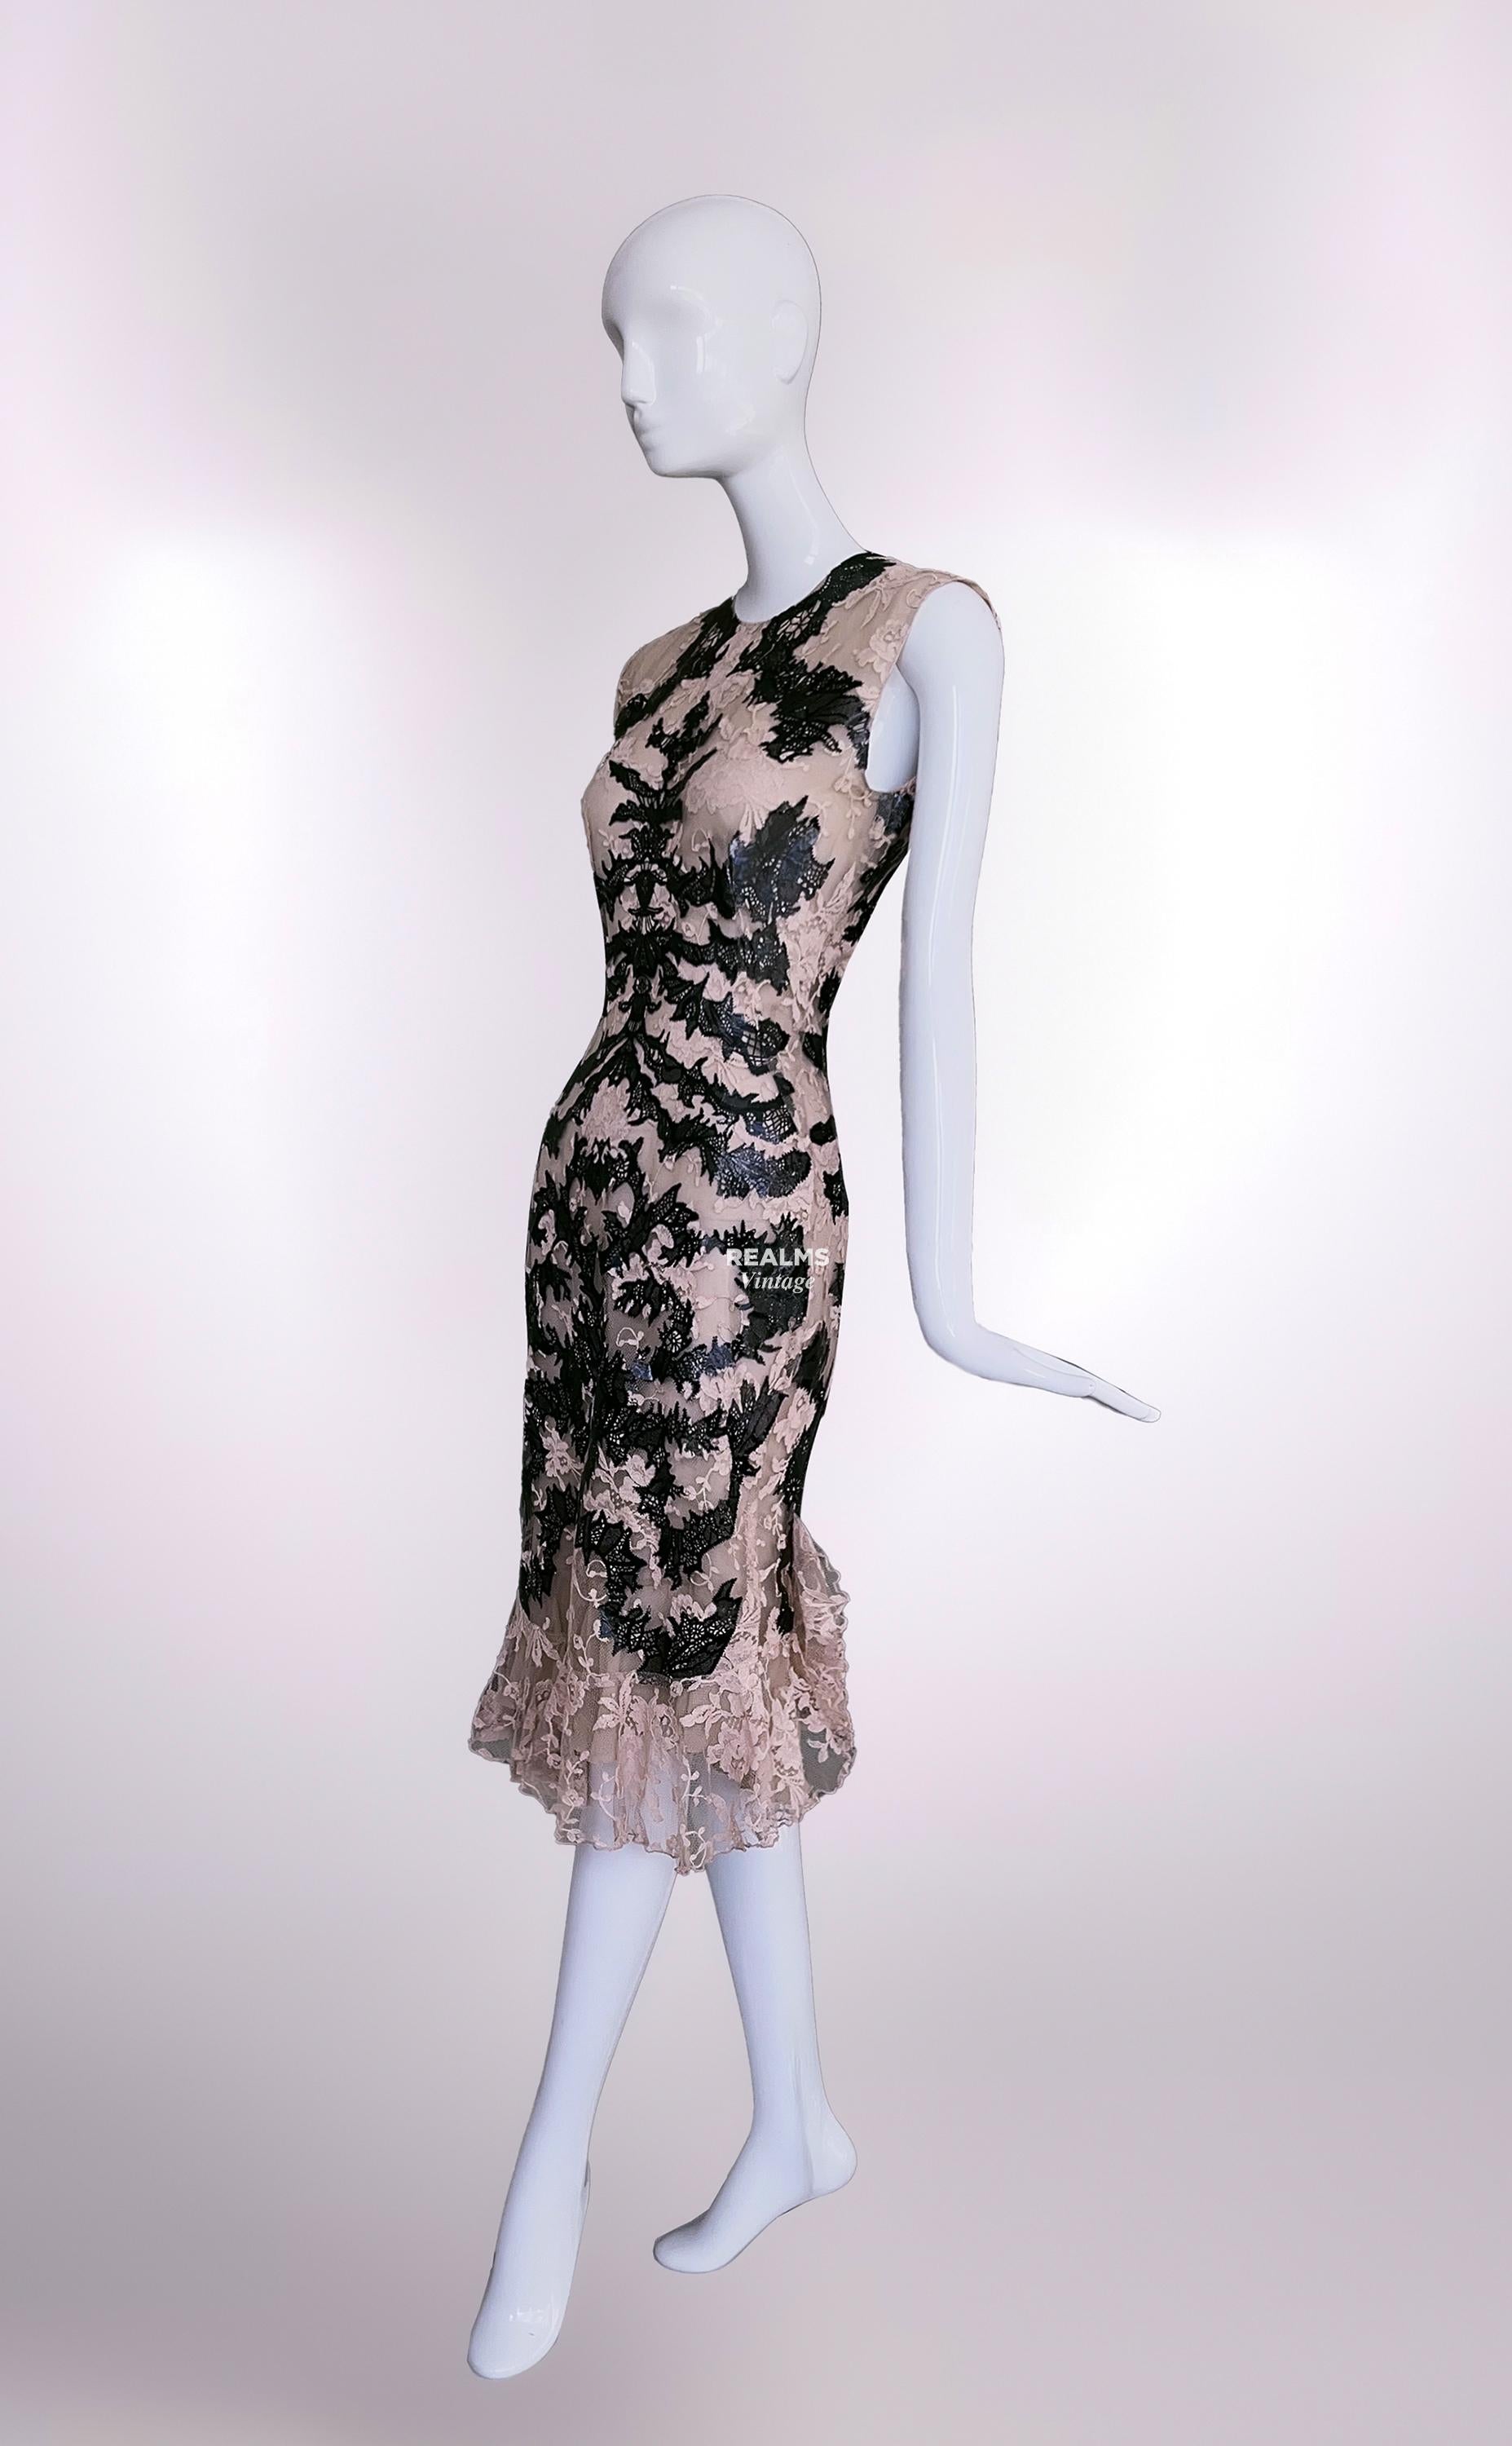 Women's Iconic Archival Alexander McQueen SS 2012 Laser Cut Silk Lace Dress For Sale